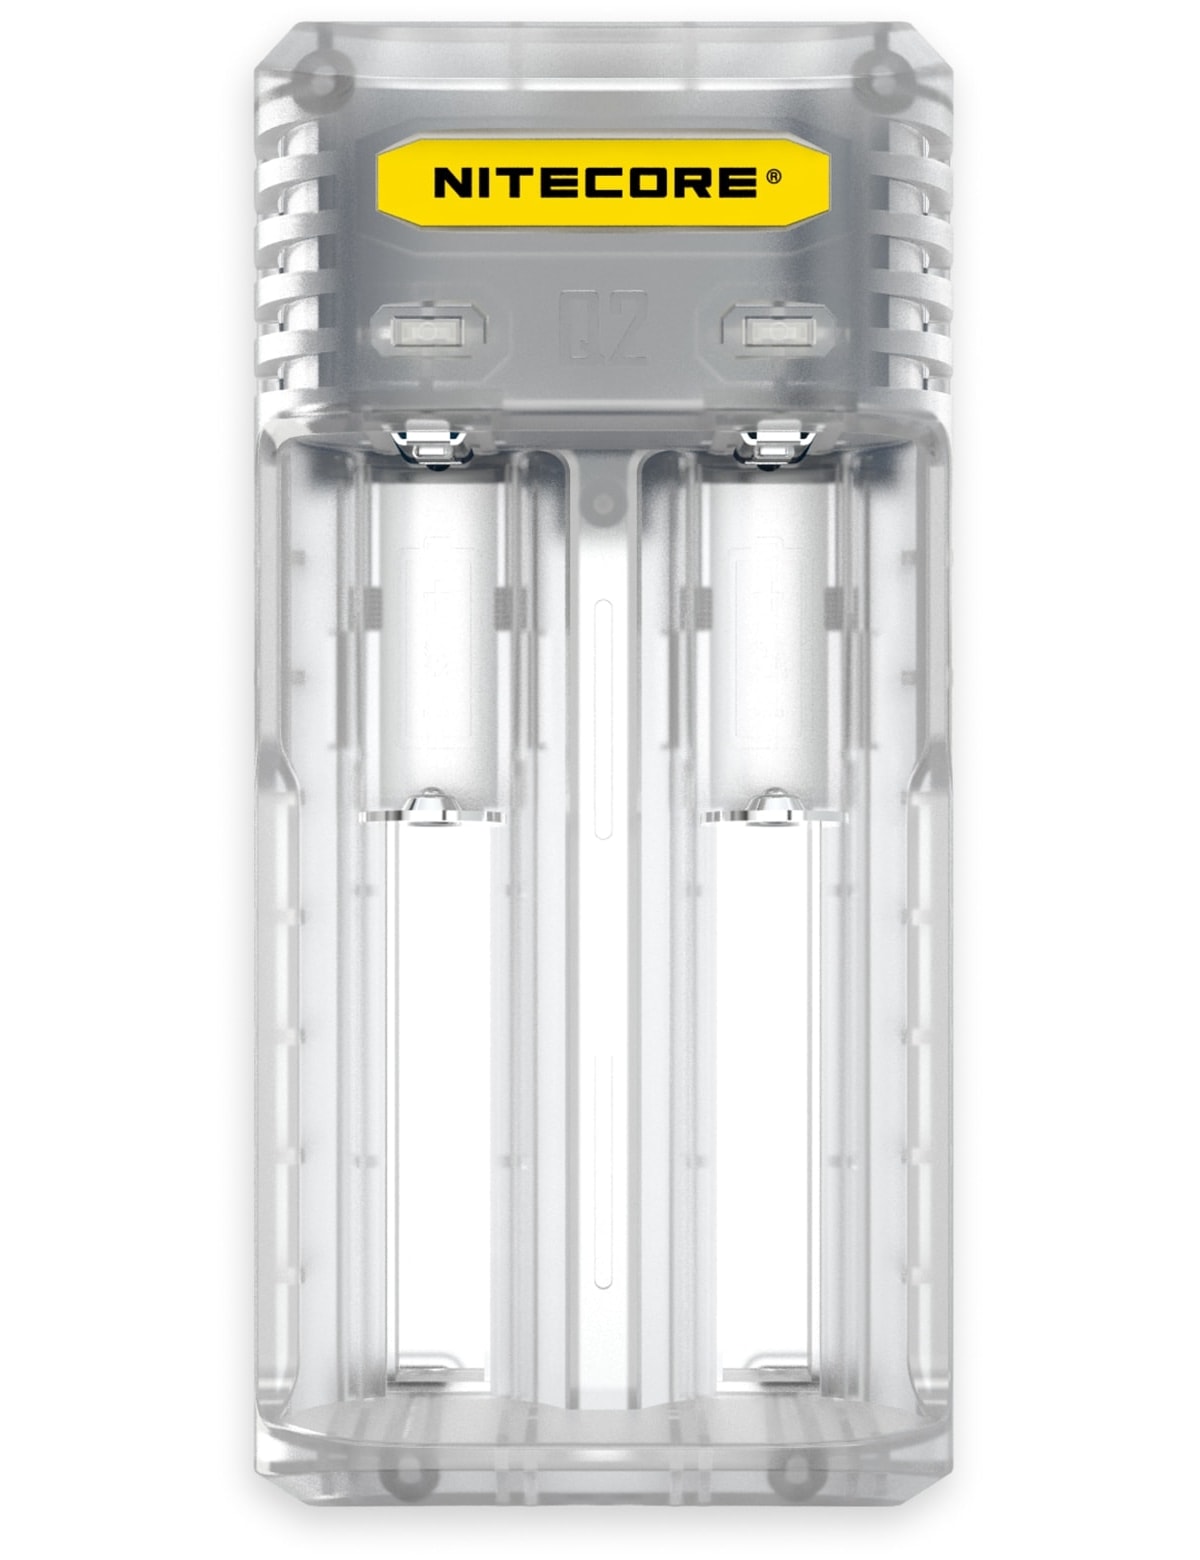 Nitecore Ladegerät Q2, 2-Schacht, für Li-Ion und Li-Ion IMR Akkus, transparent